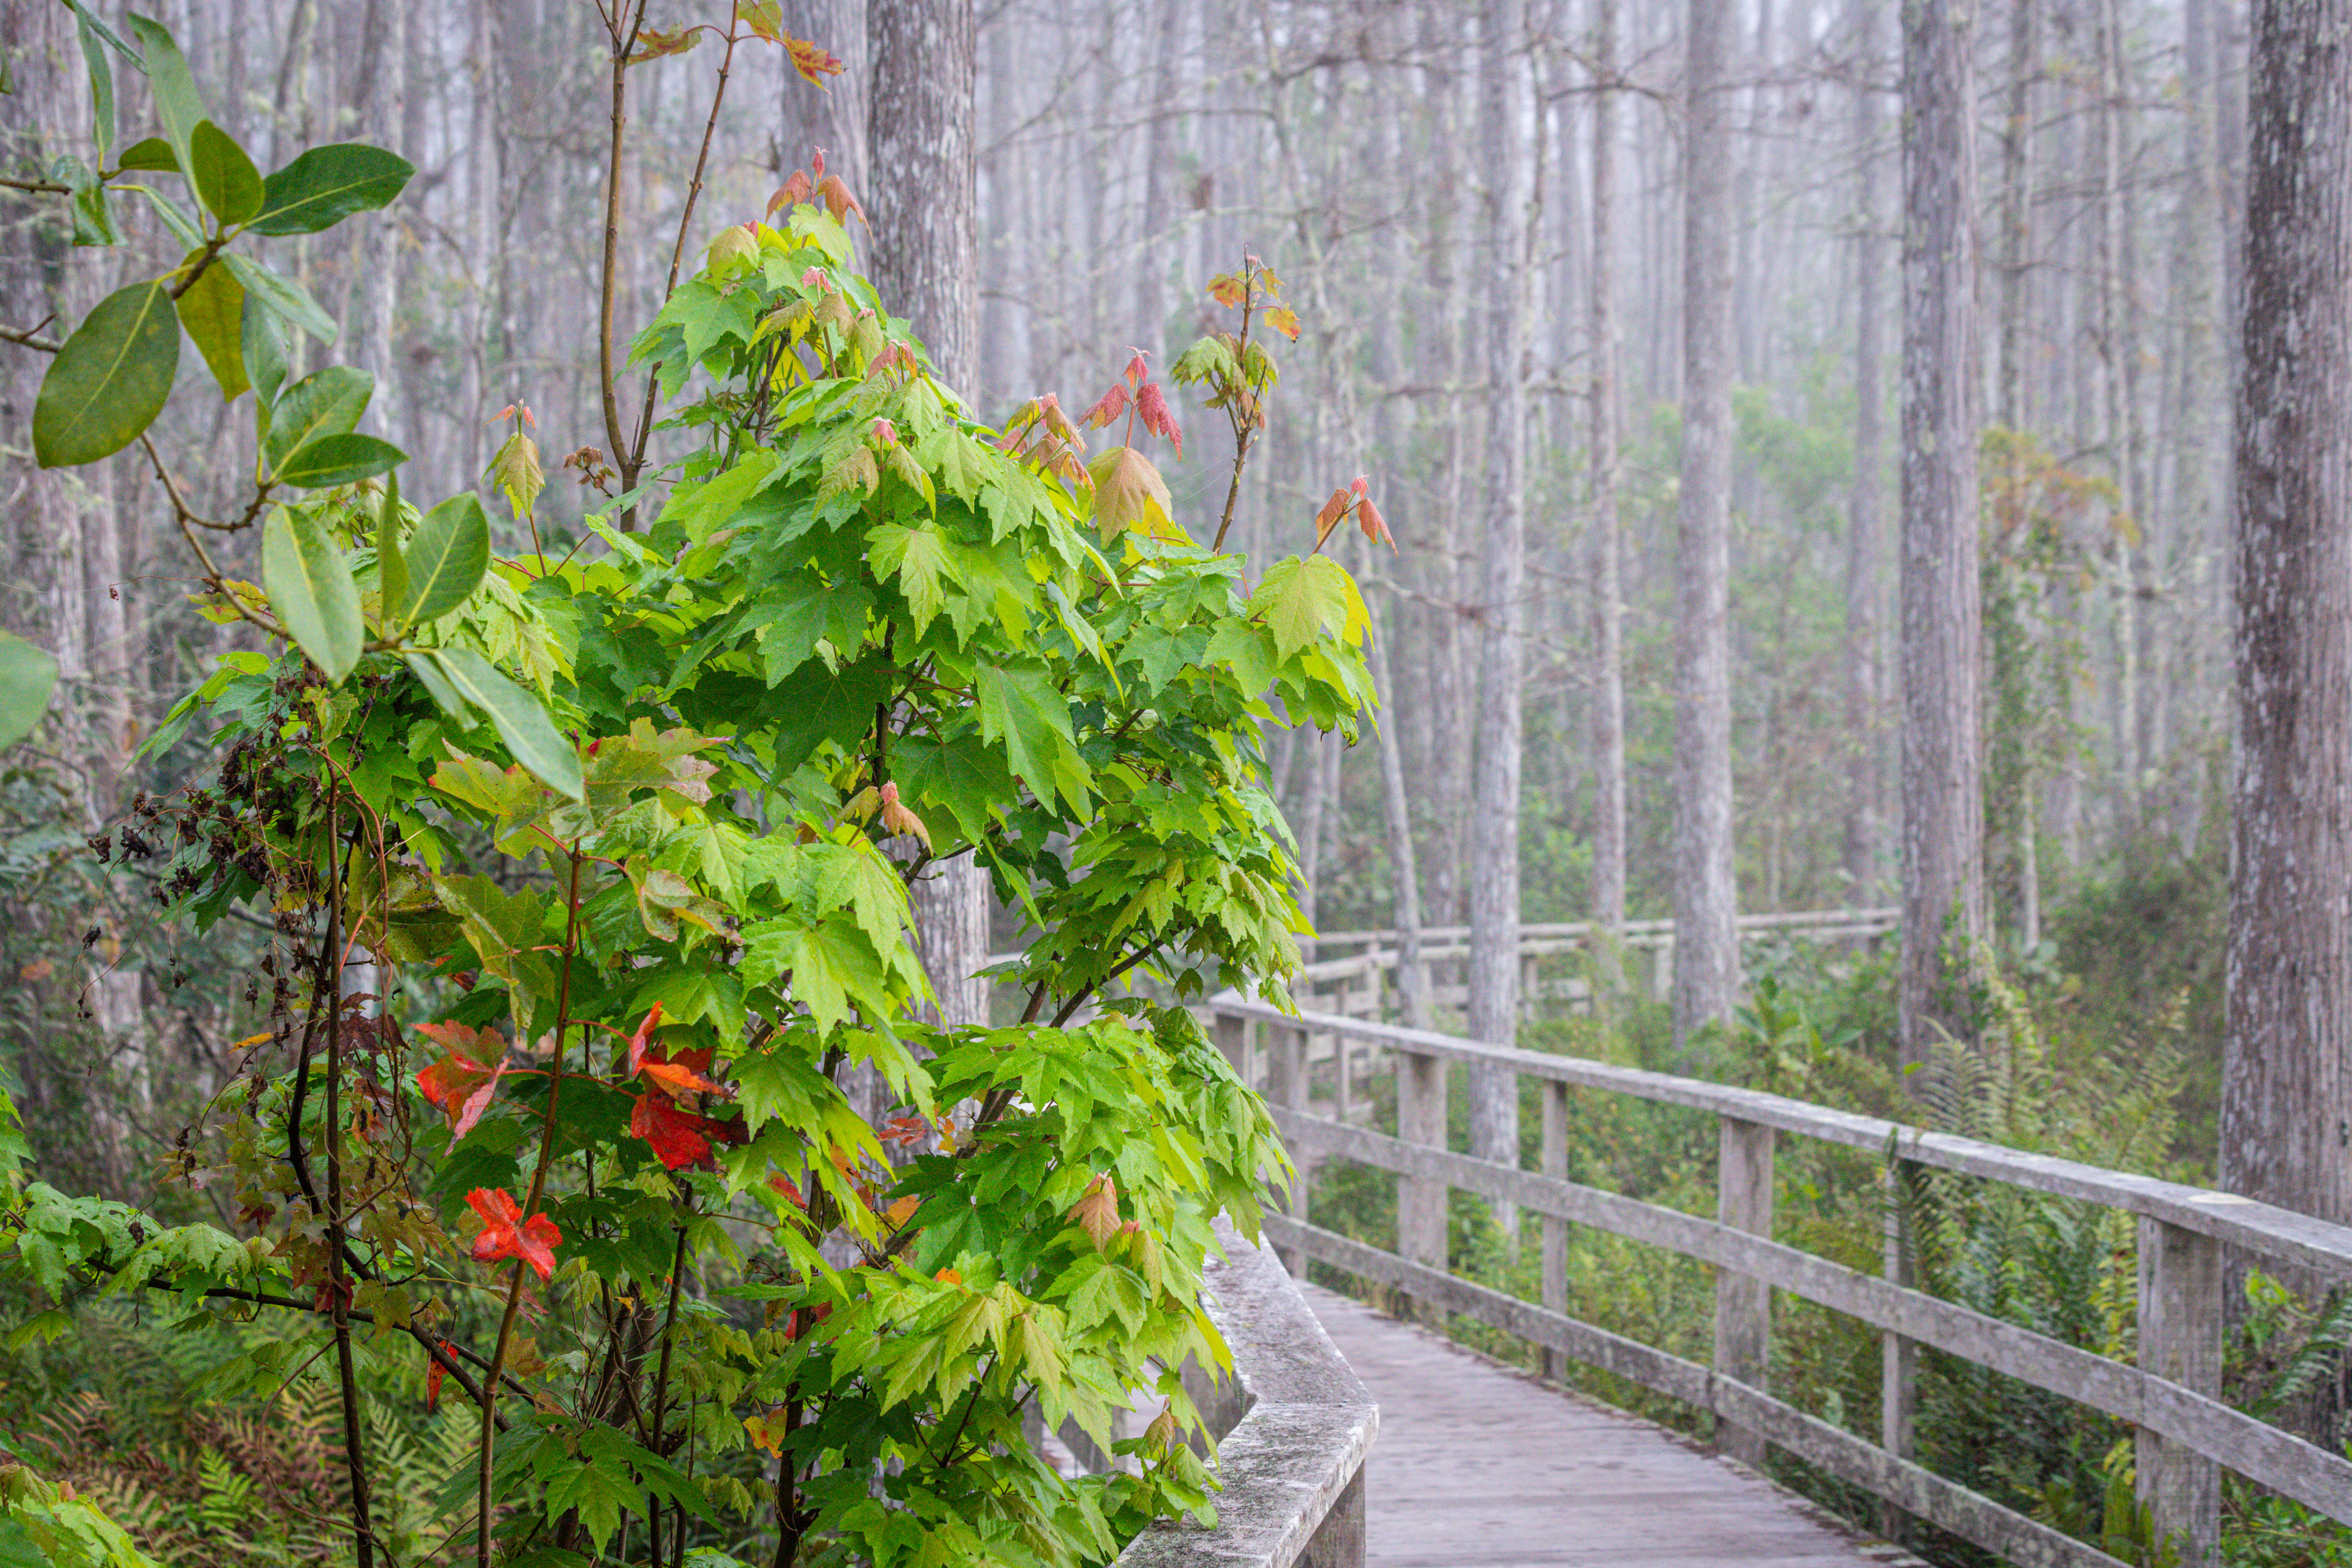 Corkscrew Swamp Sanctuary Boardwalk. Photo by Arnold Collens